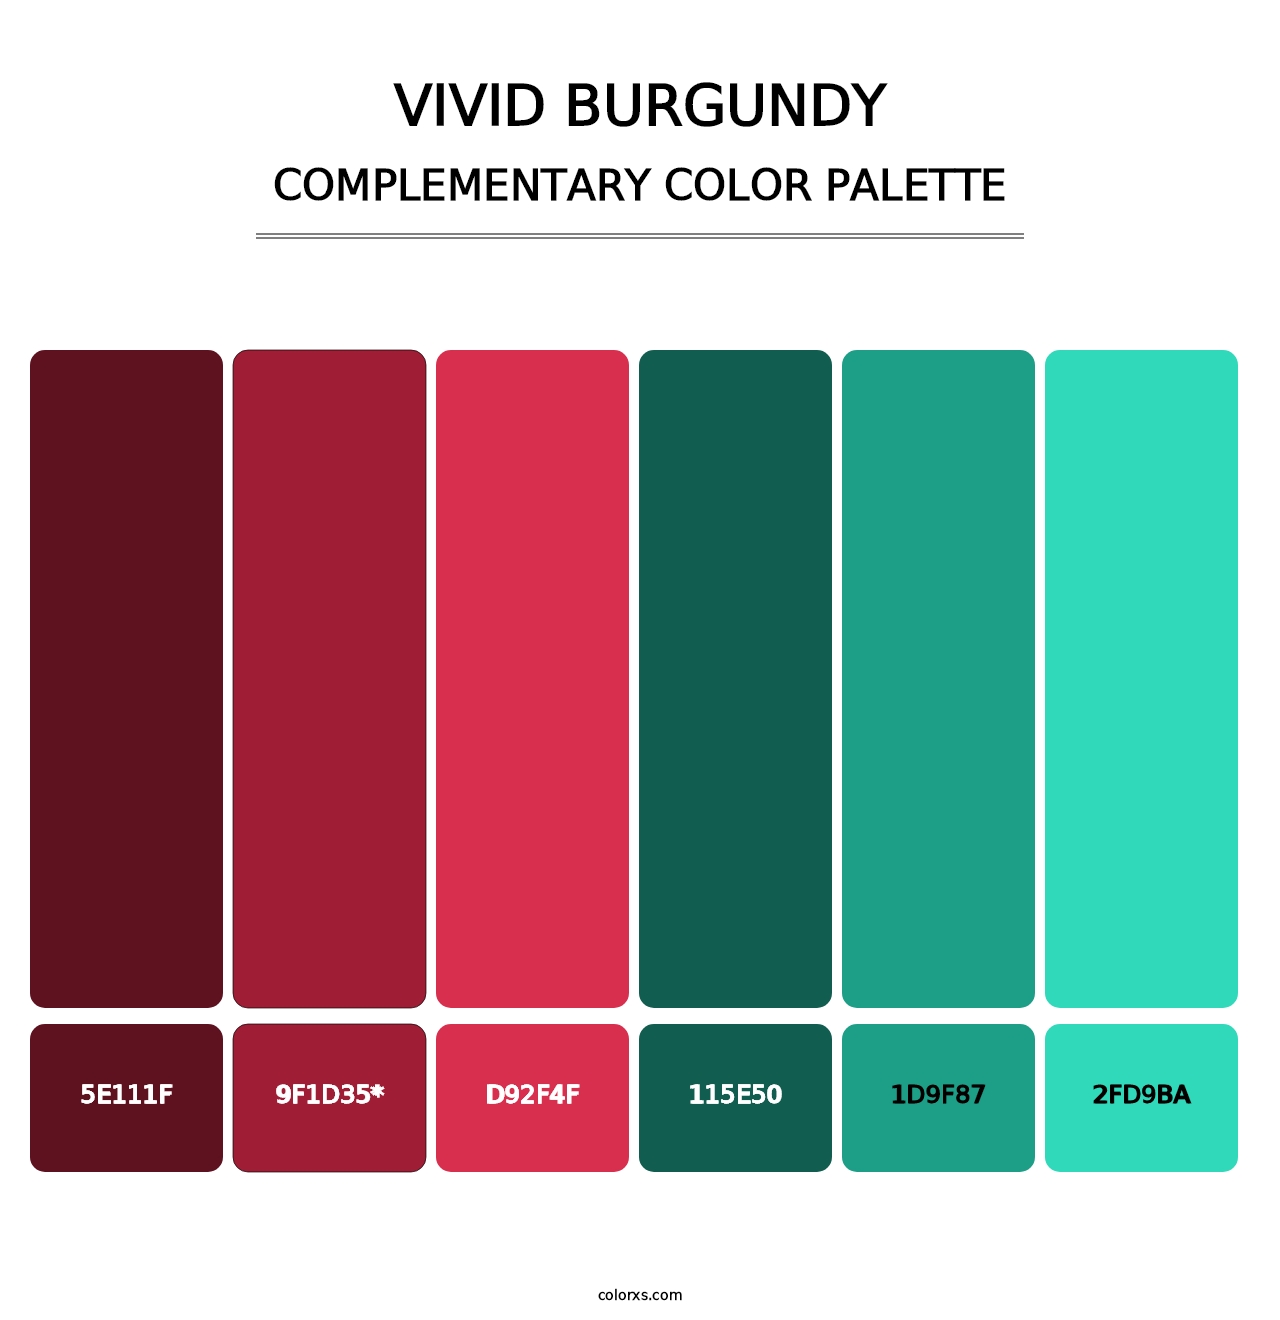 Vivid Burgundy - Complementary Color Palette